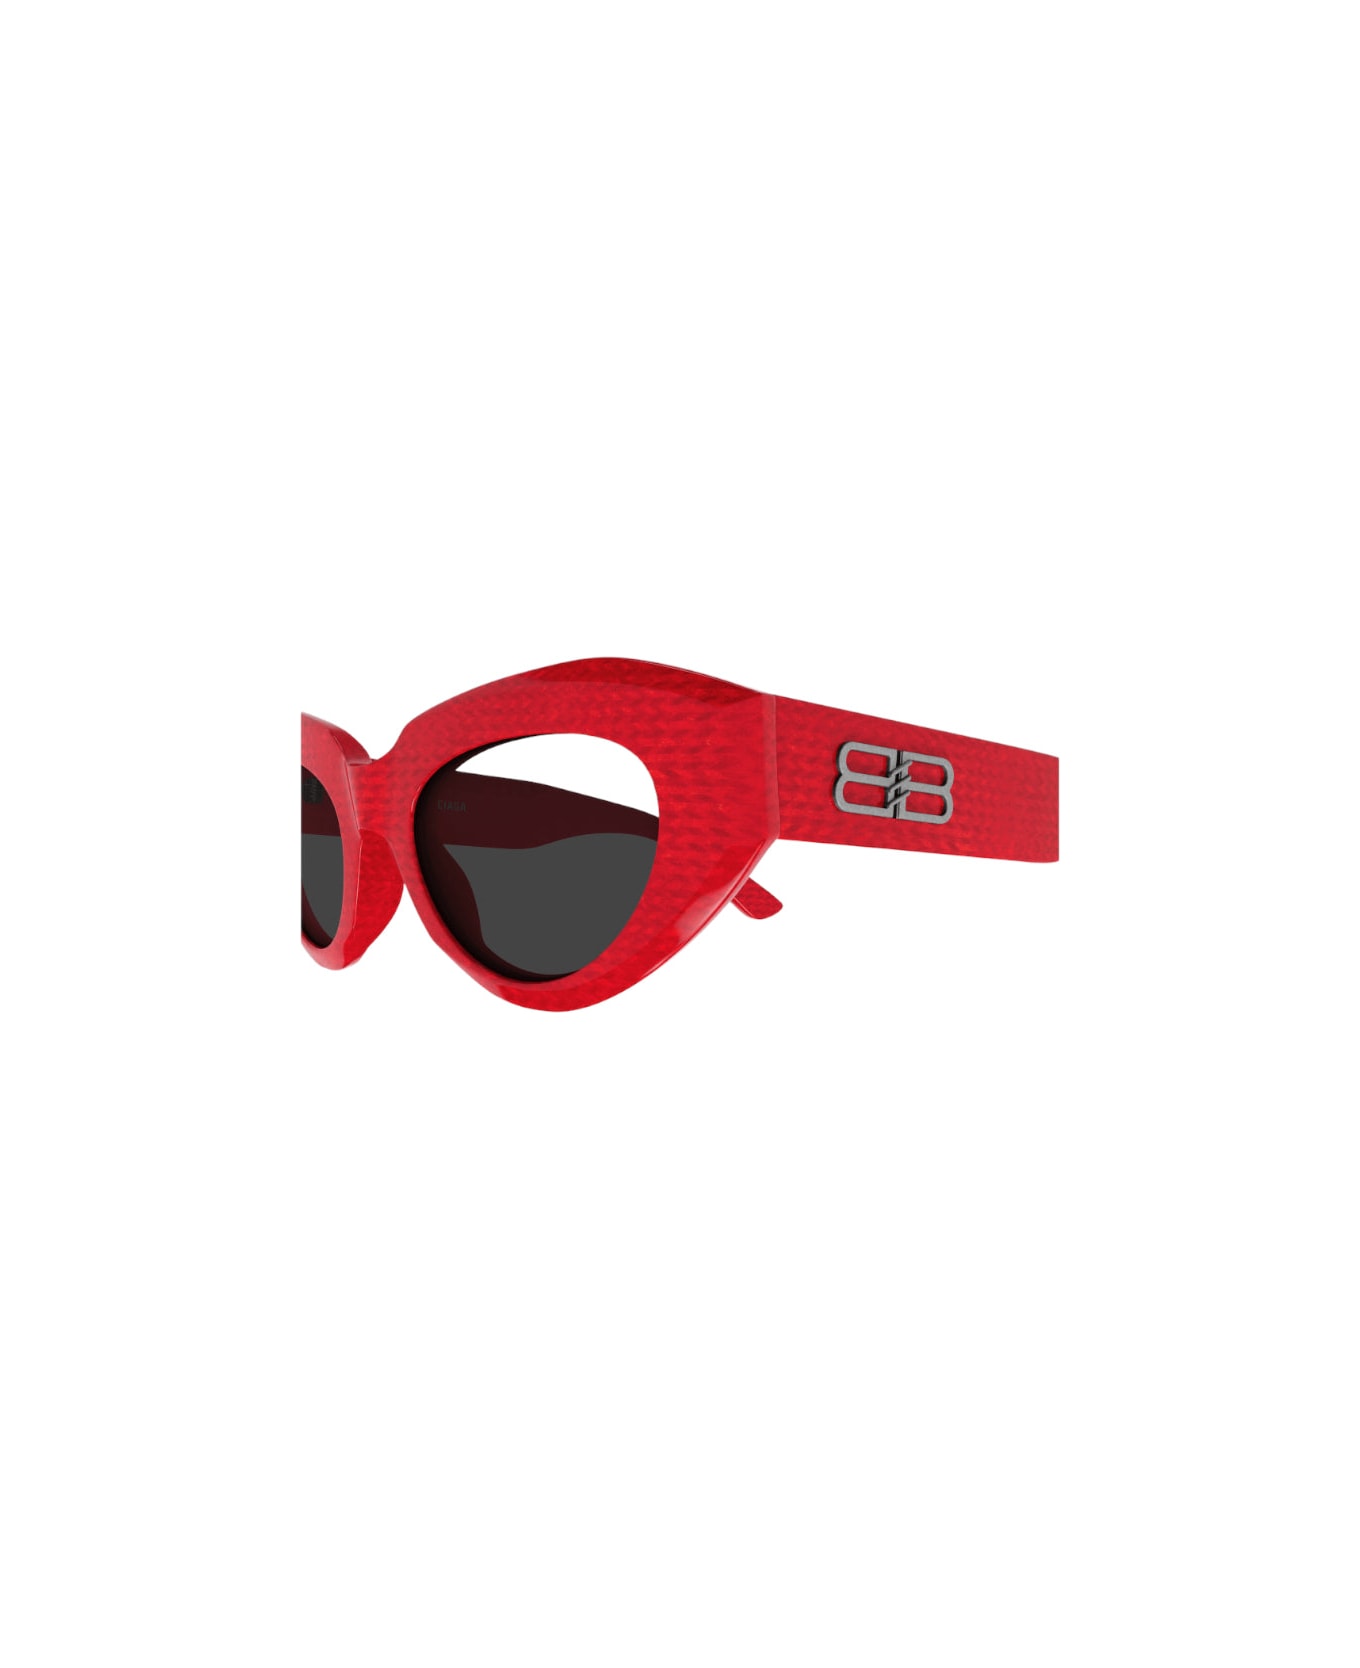 Balenciaga Eyewear Bb0236 - Red Sunglasses